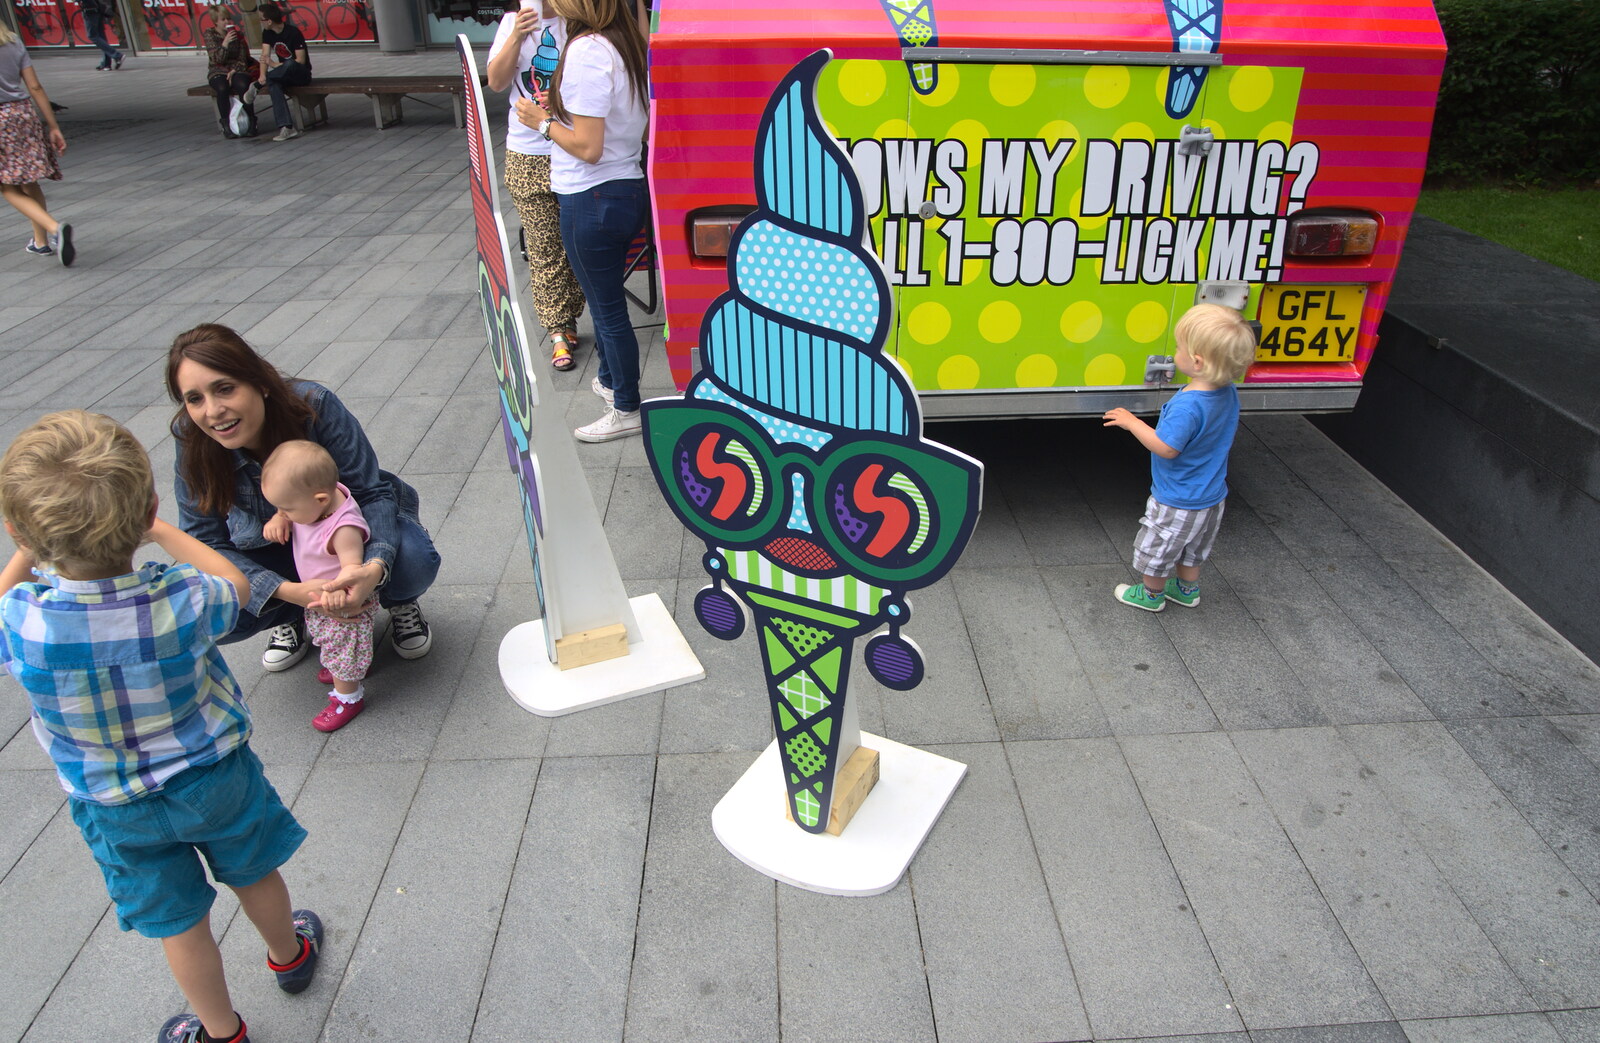 Harry lurks by the ice-cream van from Spitalfields and Brick Lane Street Art, Whitechapel, London - 10th August 2013